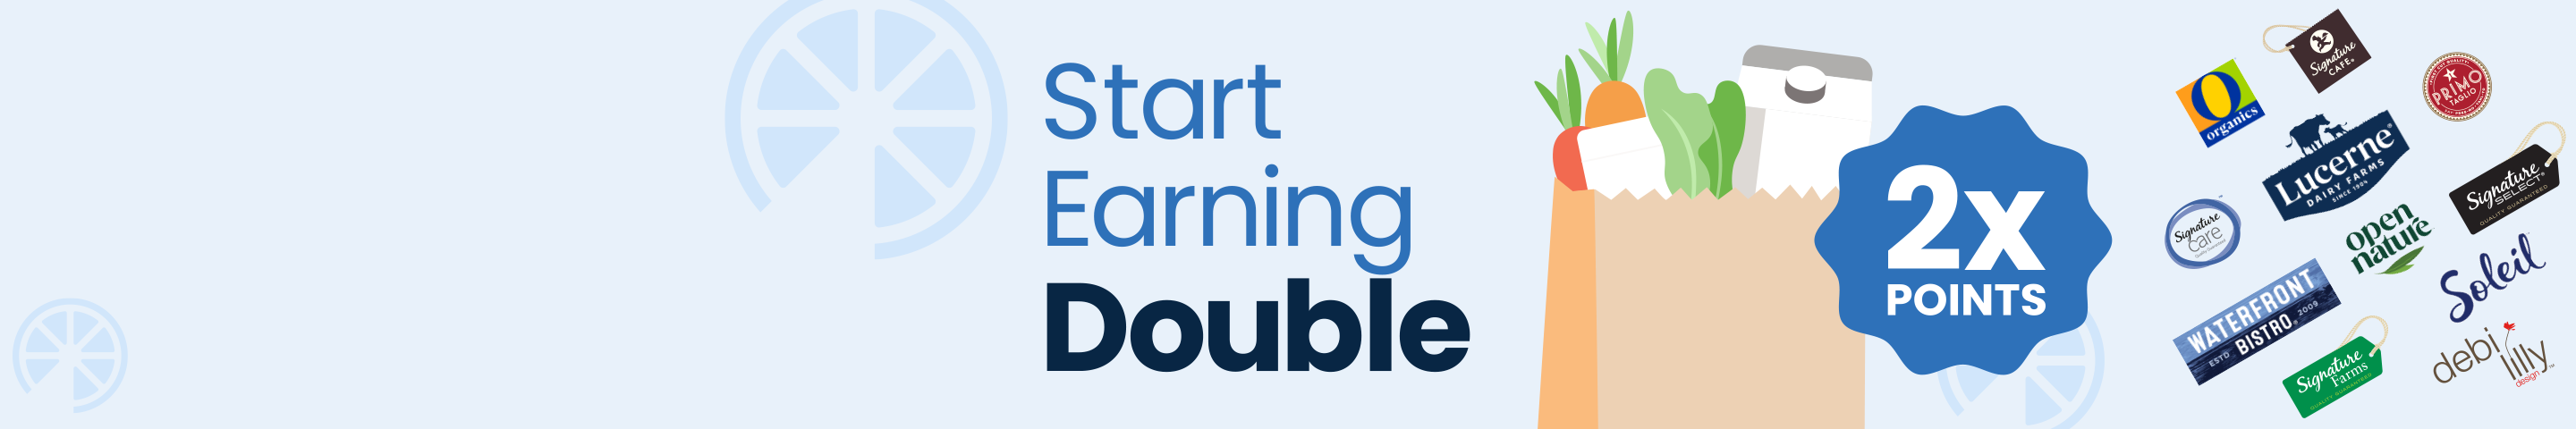 Start Earning Double Points